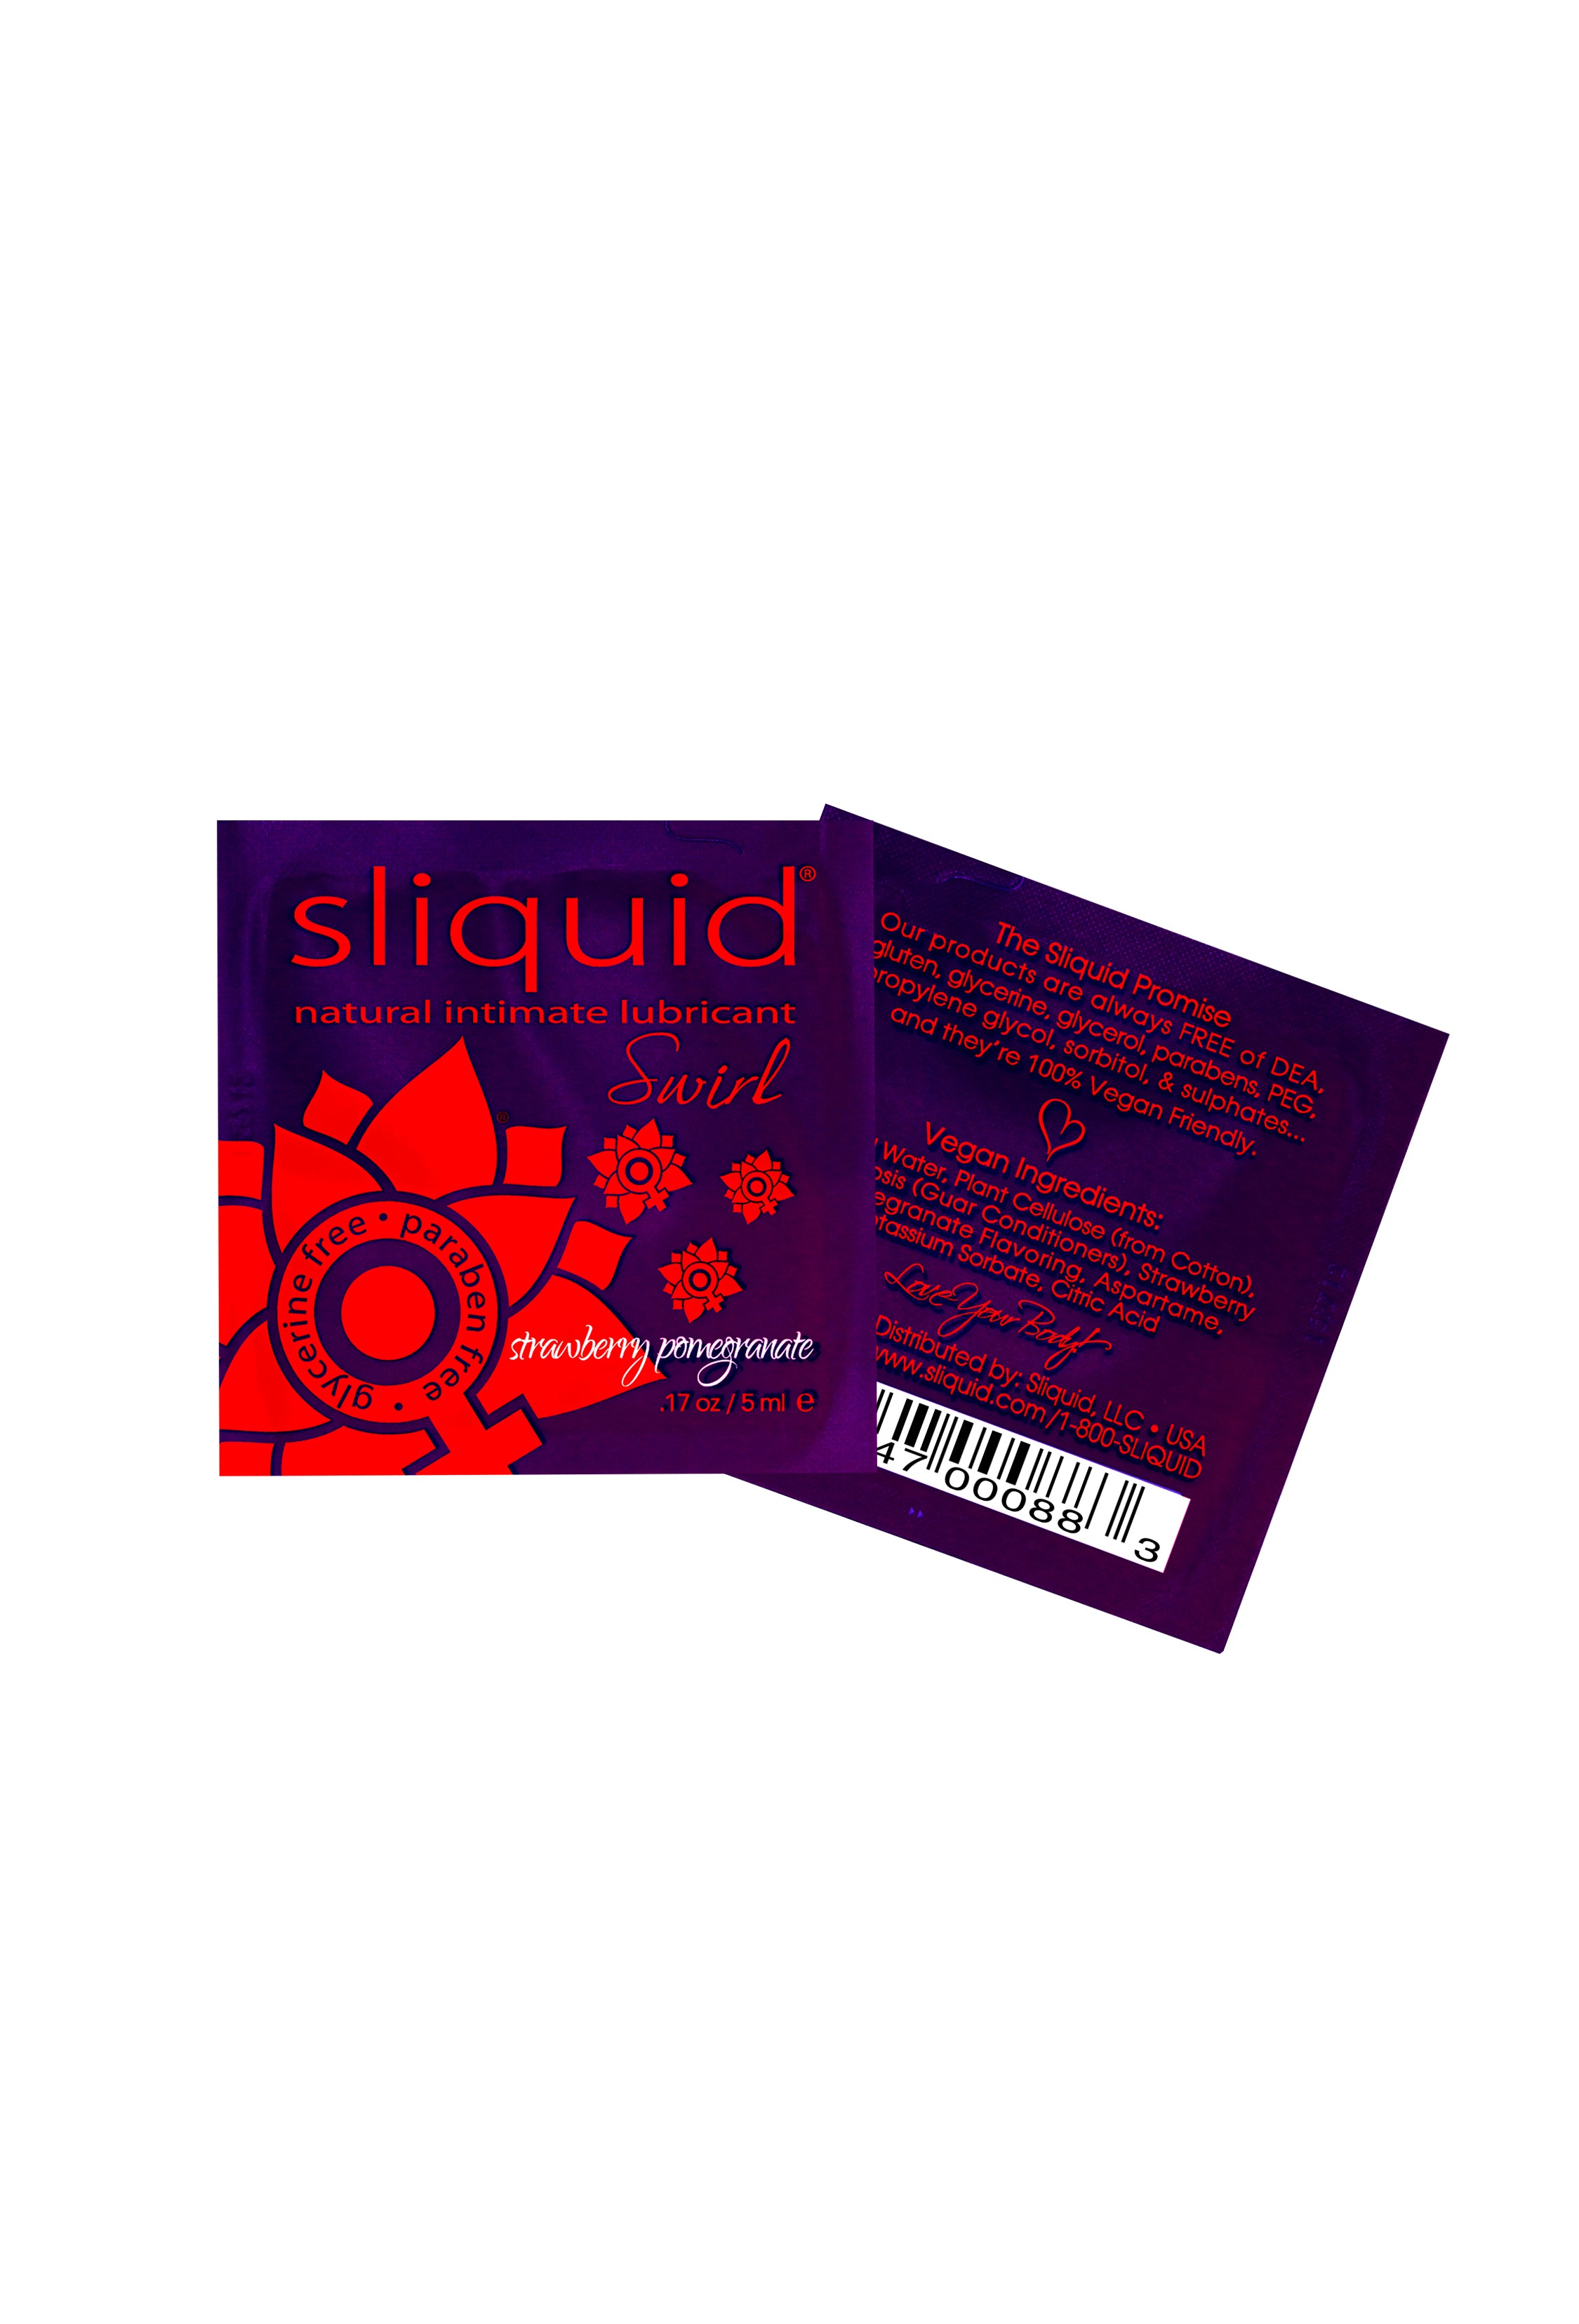 Sliquid Naturals Swirl • Flavored Water Lubricant